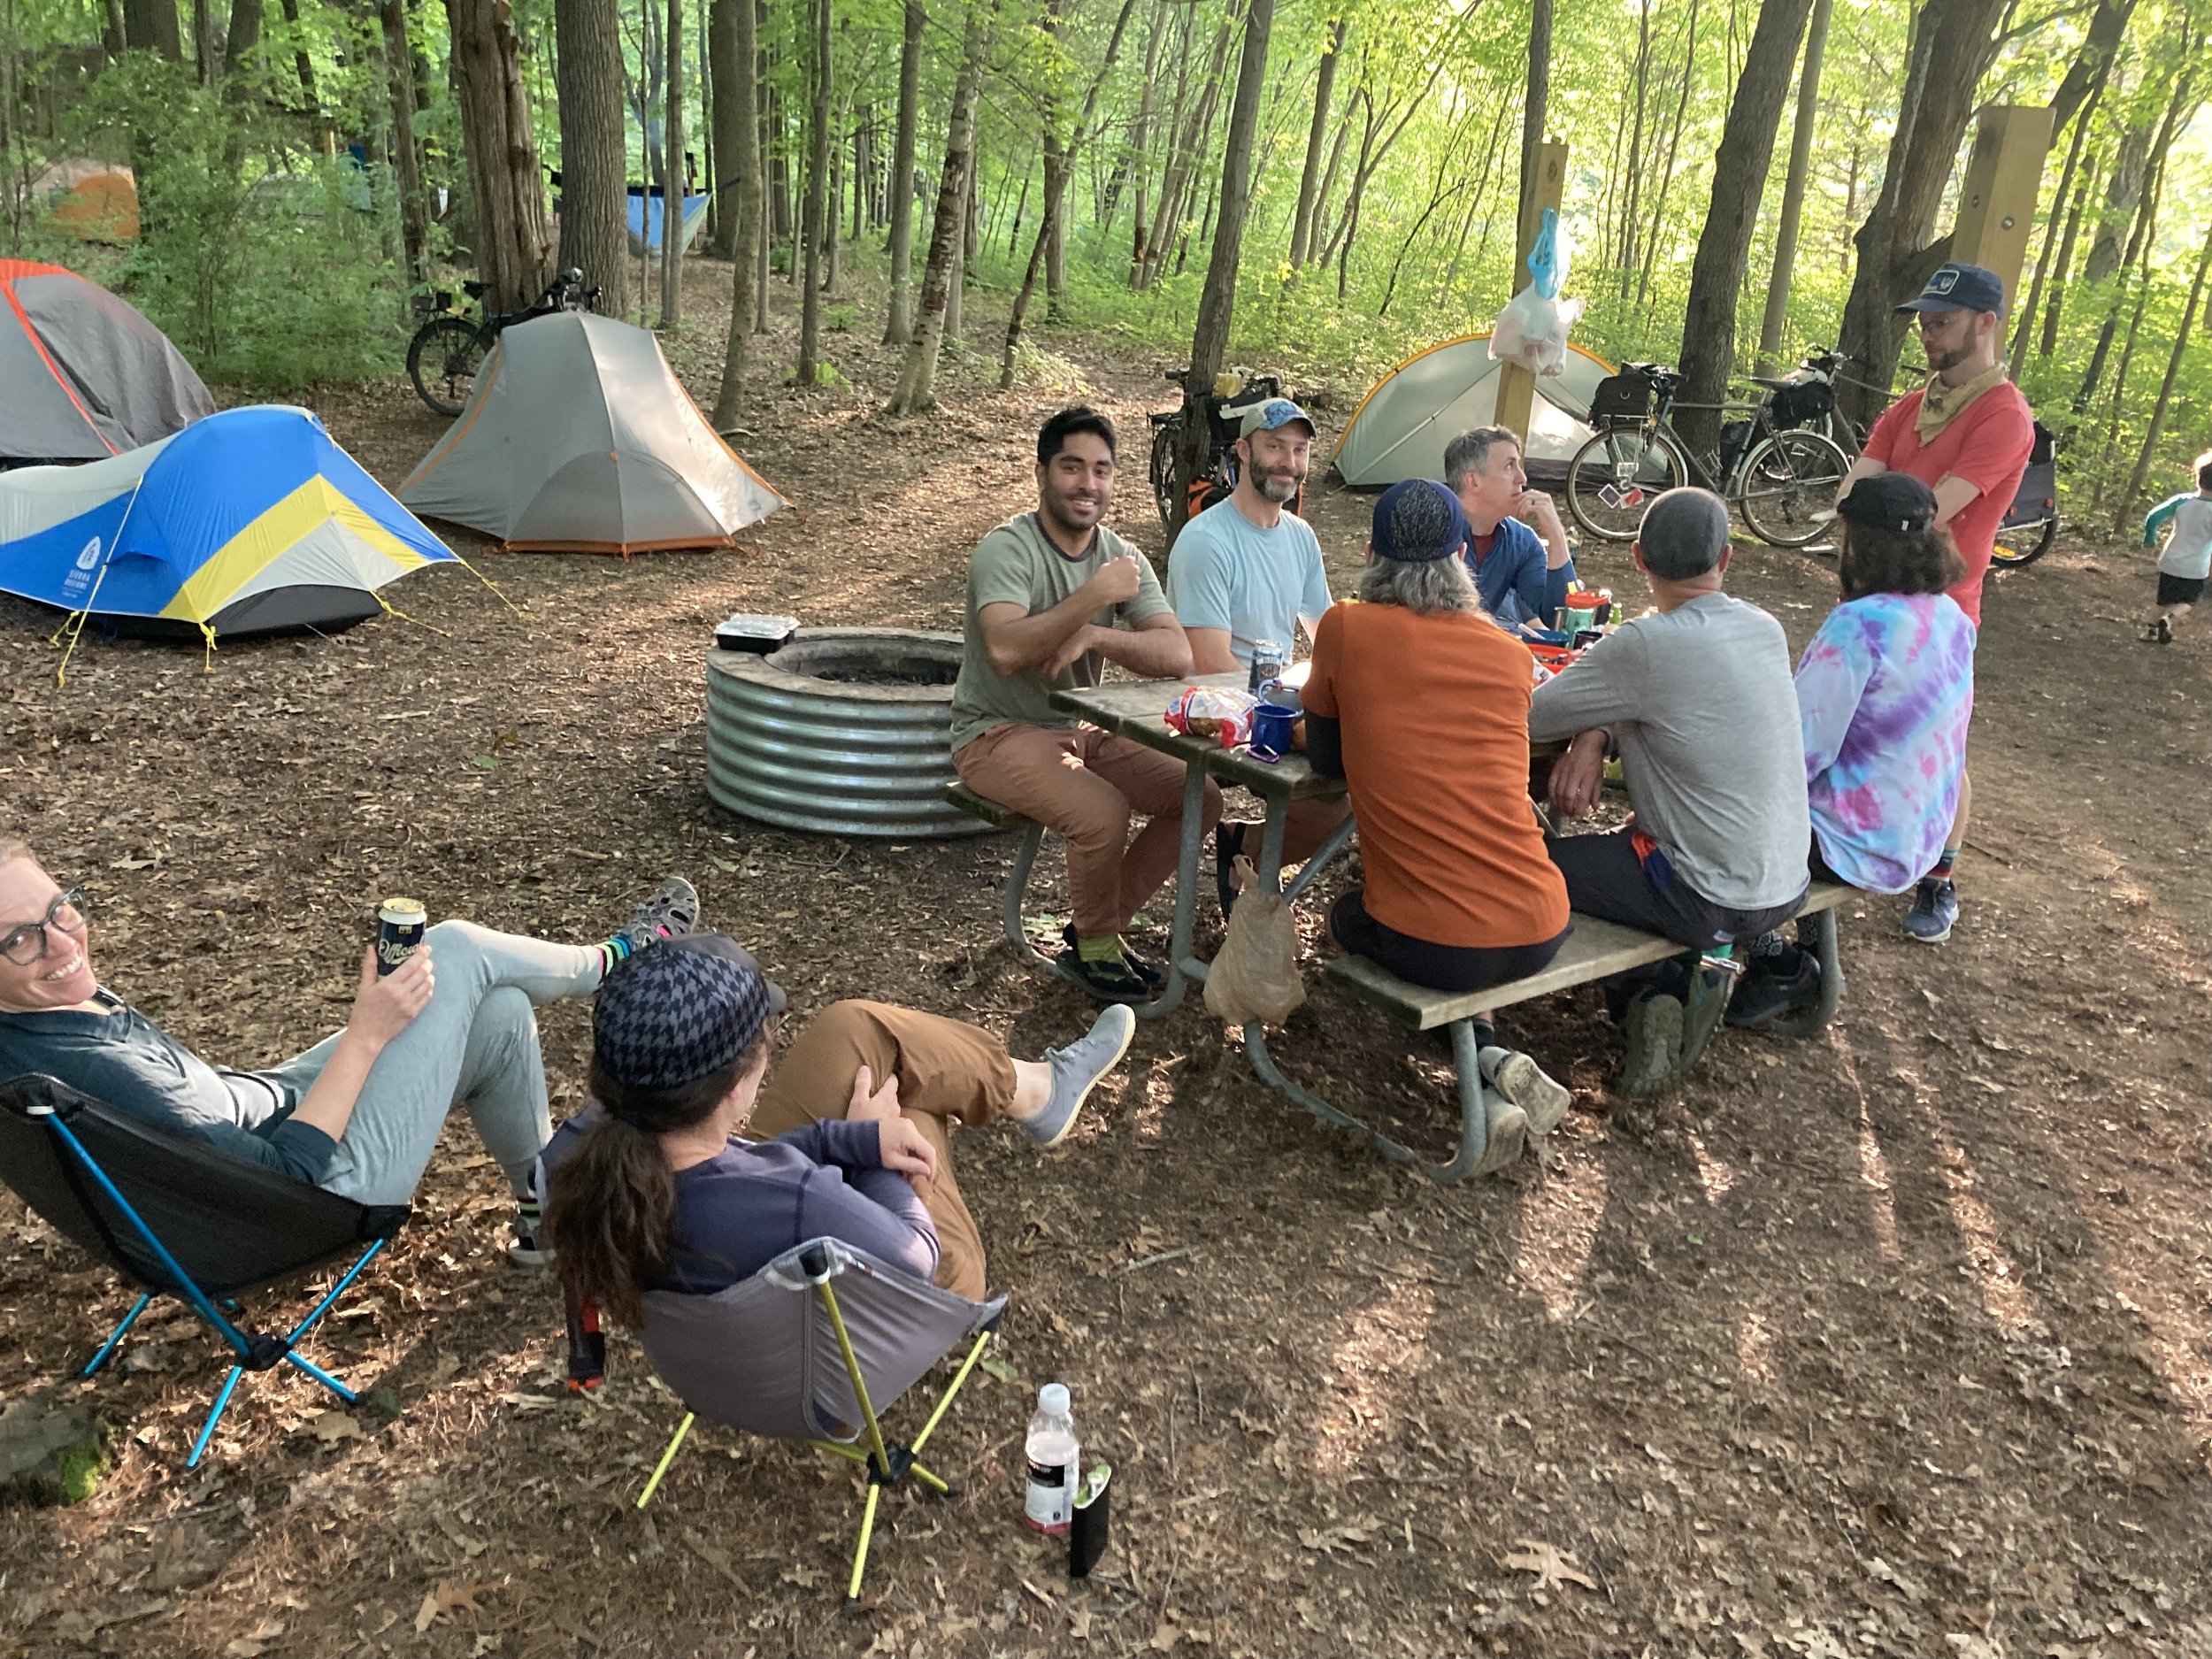 Ann Arbor cycling community enjoys Sub-24 Hour bike camping. Source: Sic Transit Cycles website.